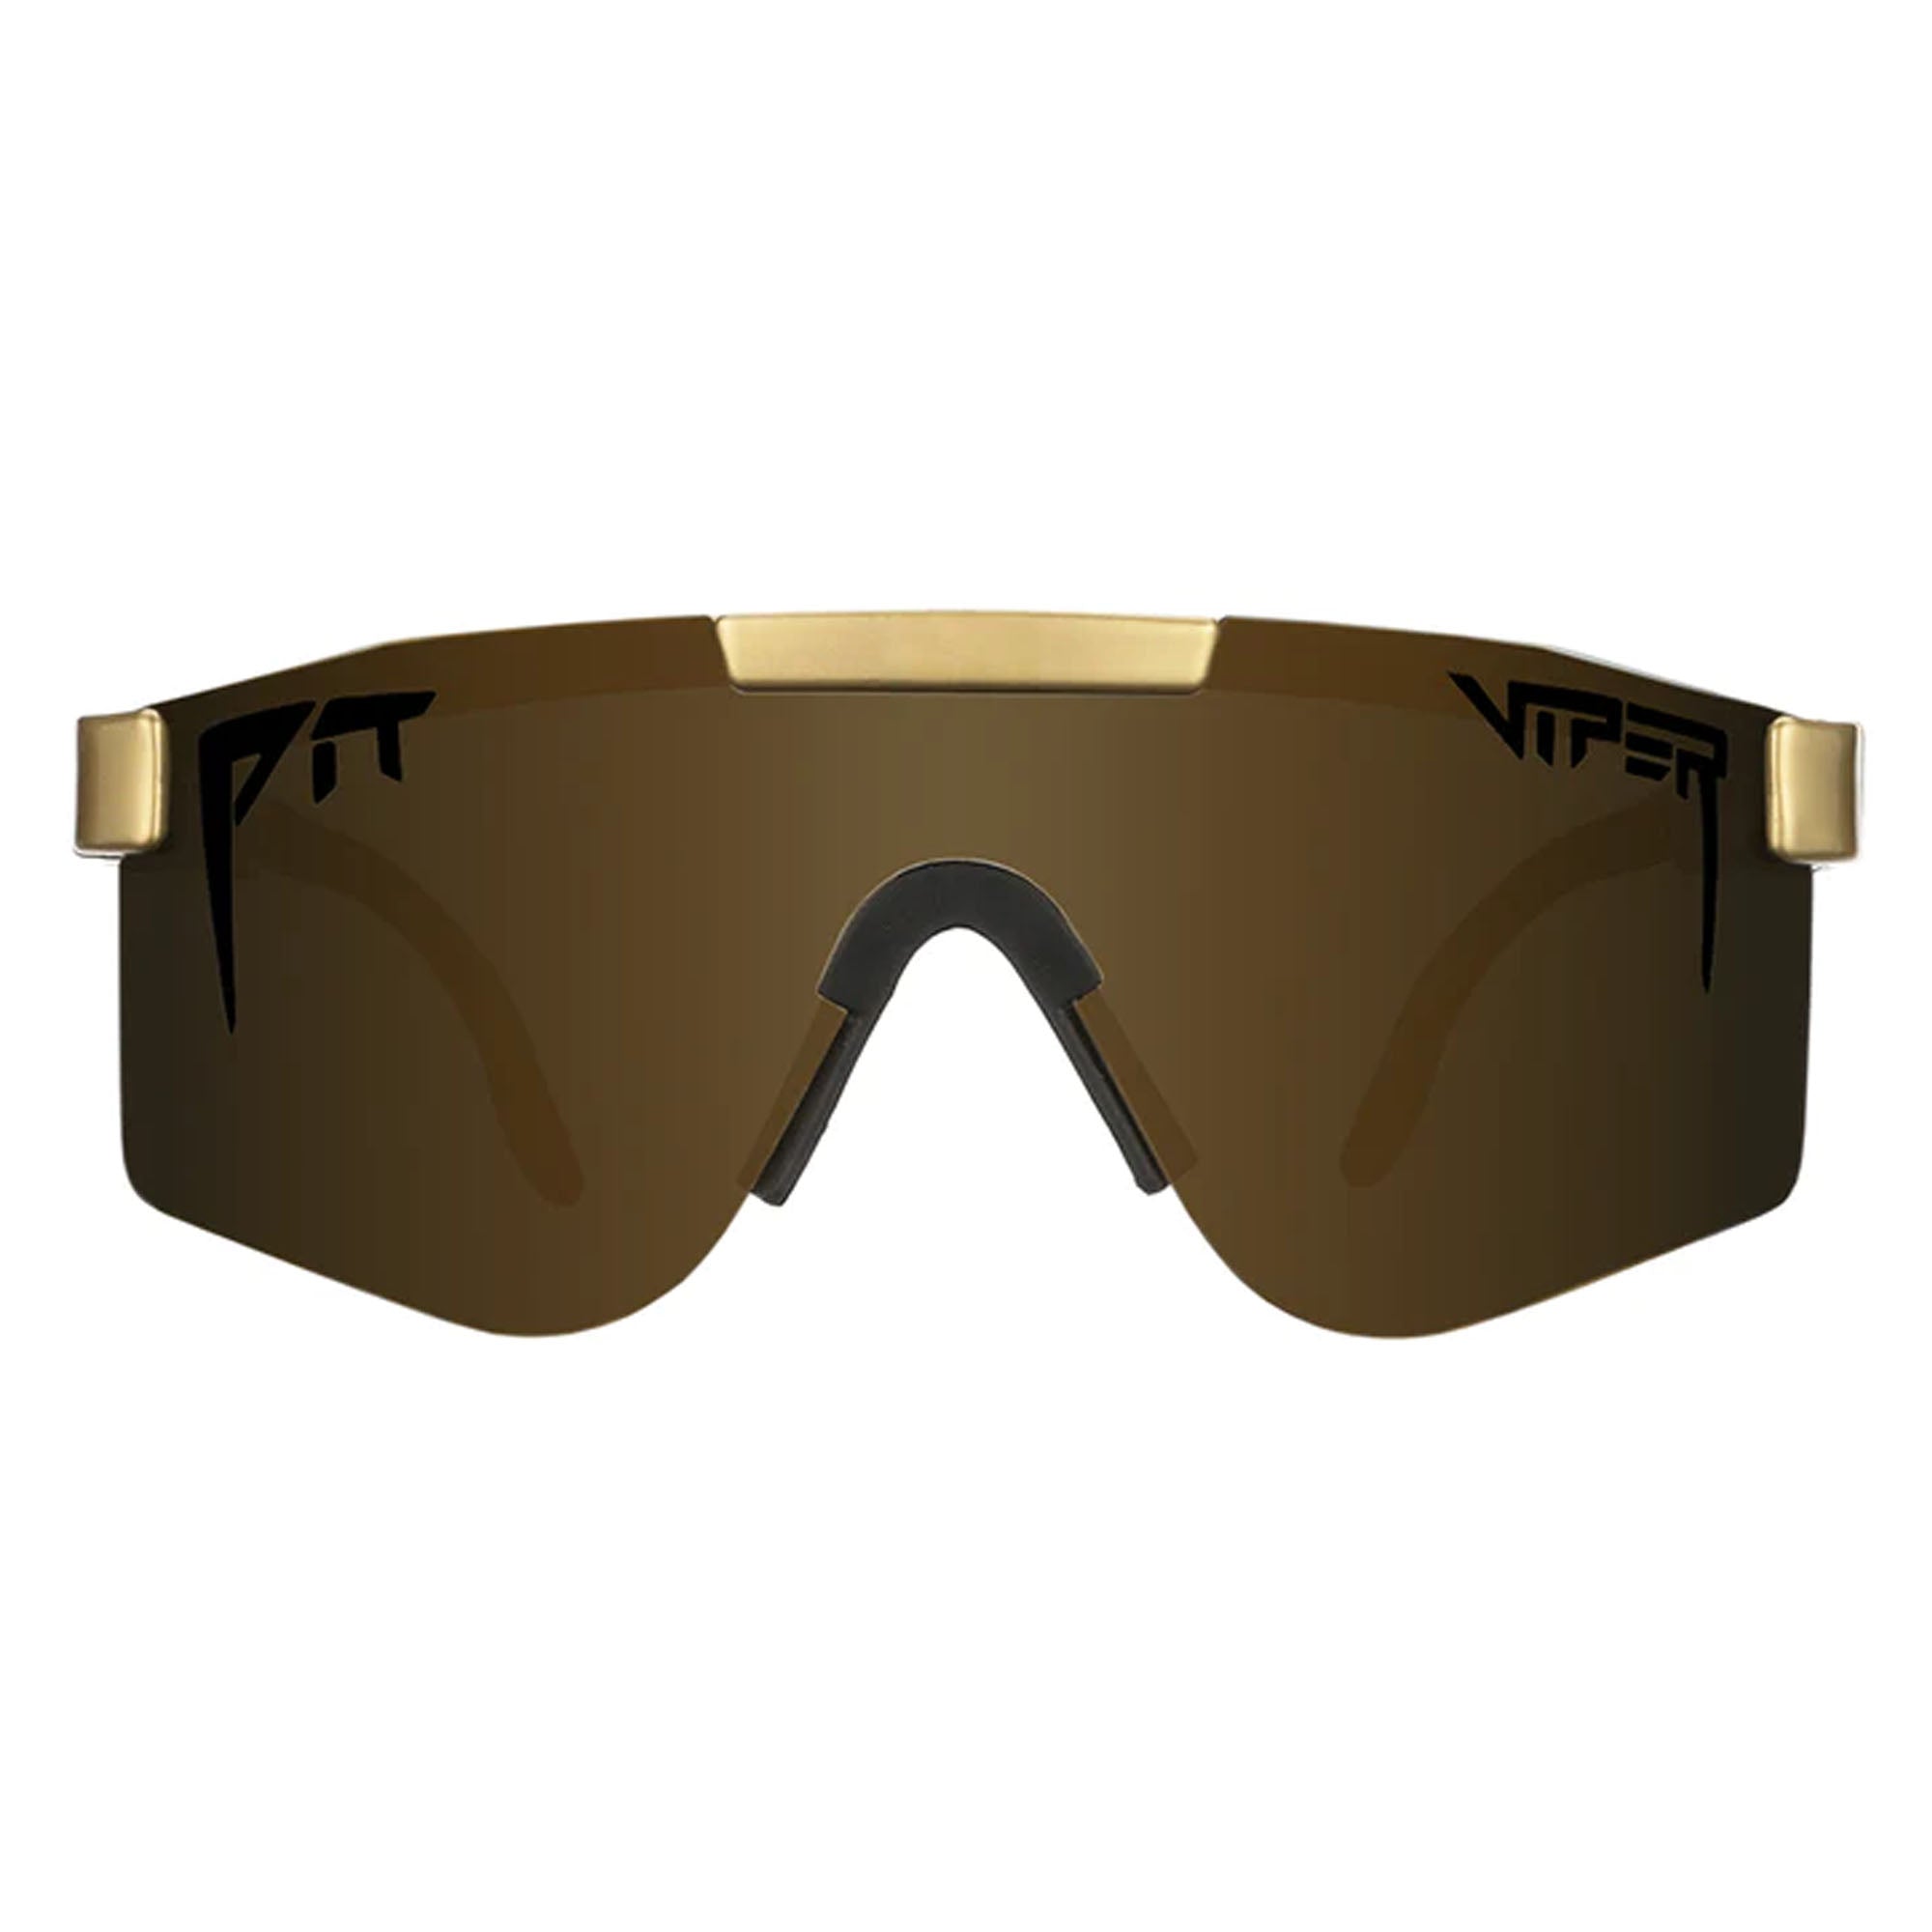 Pit Viper The Gold Standard Polarized Men's Sunglasses